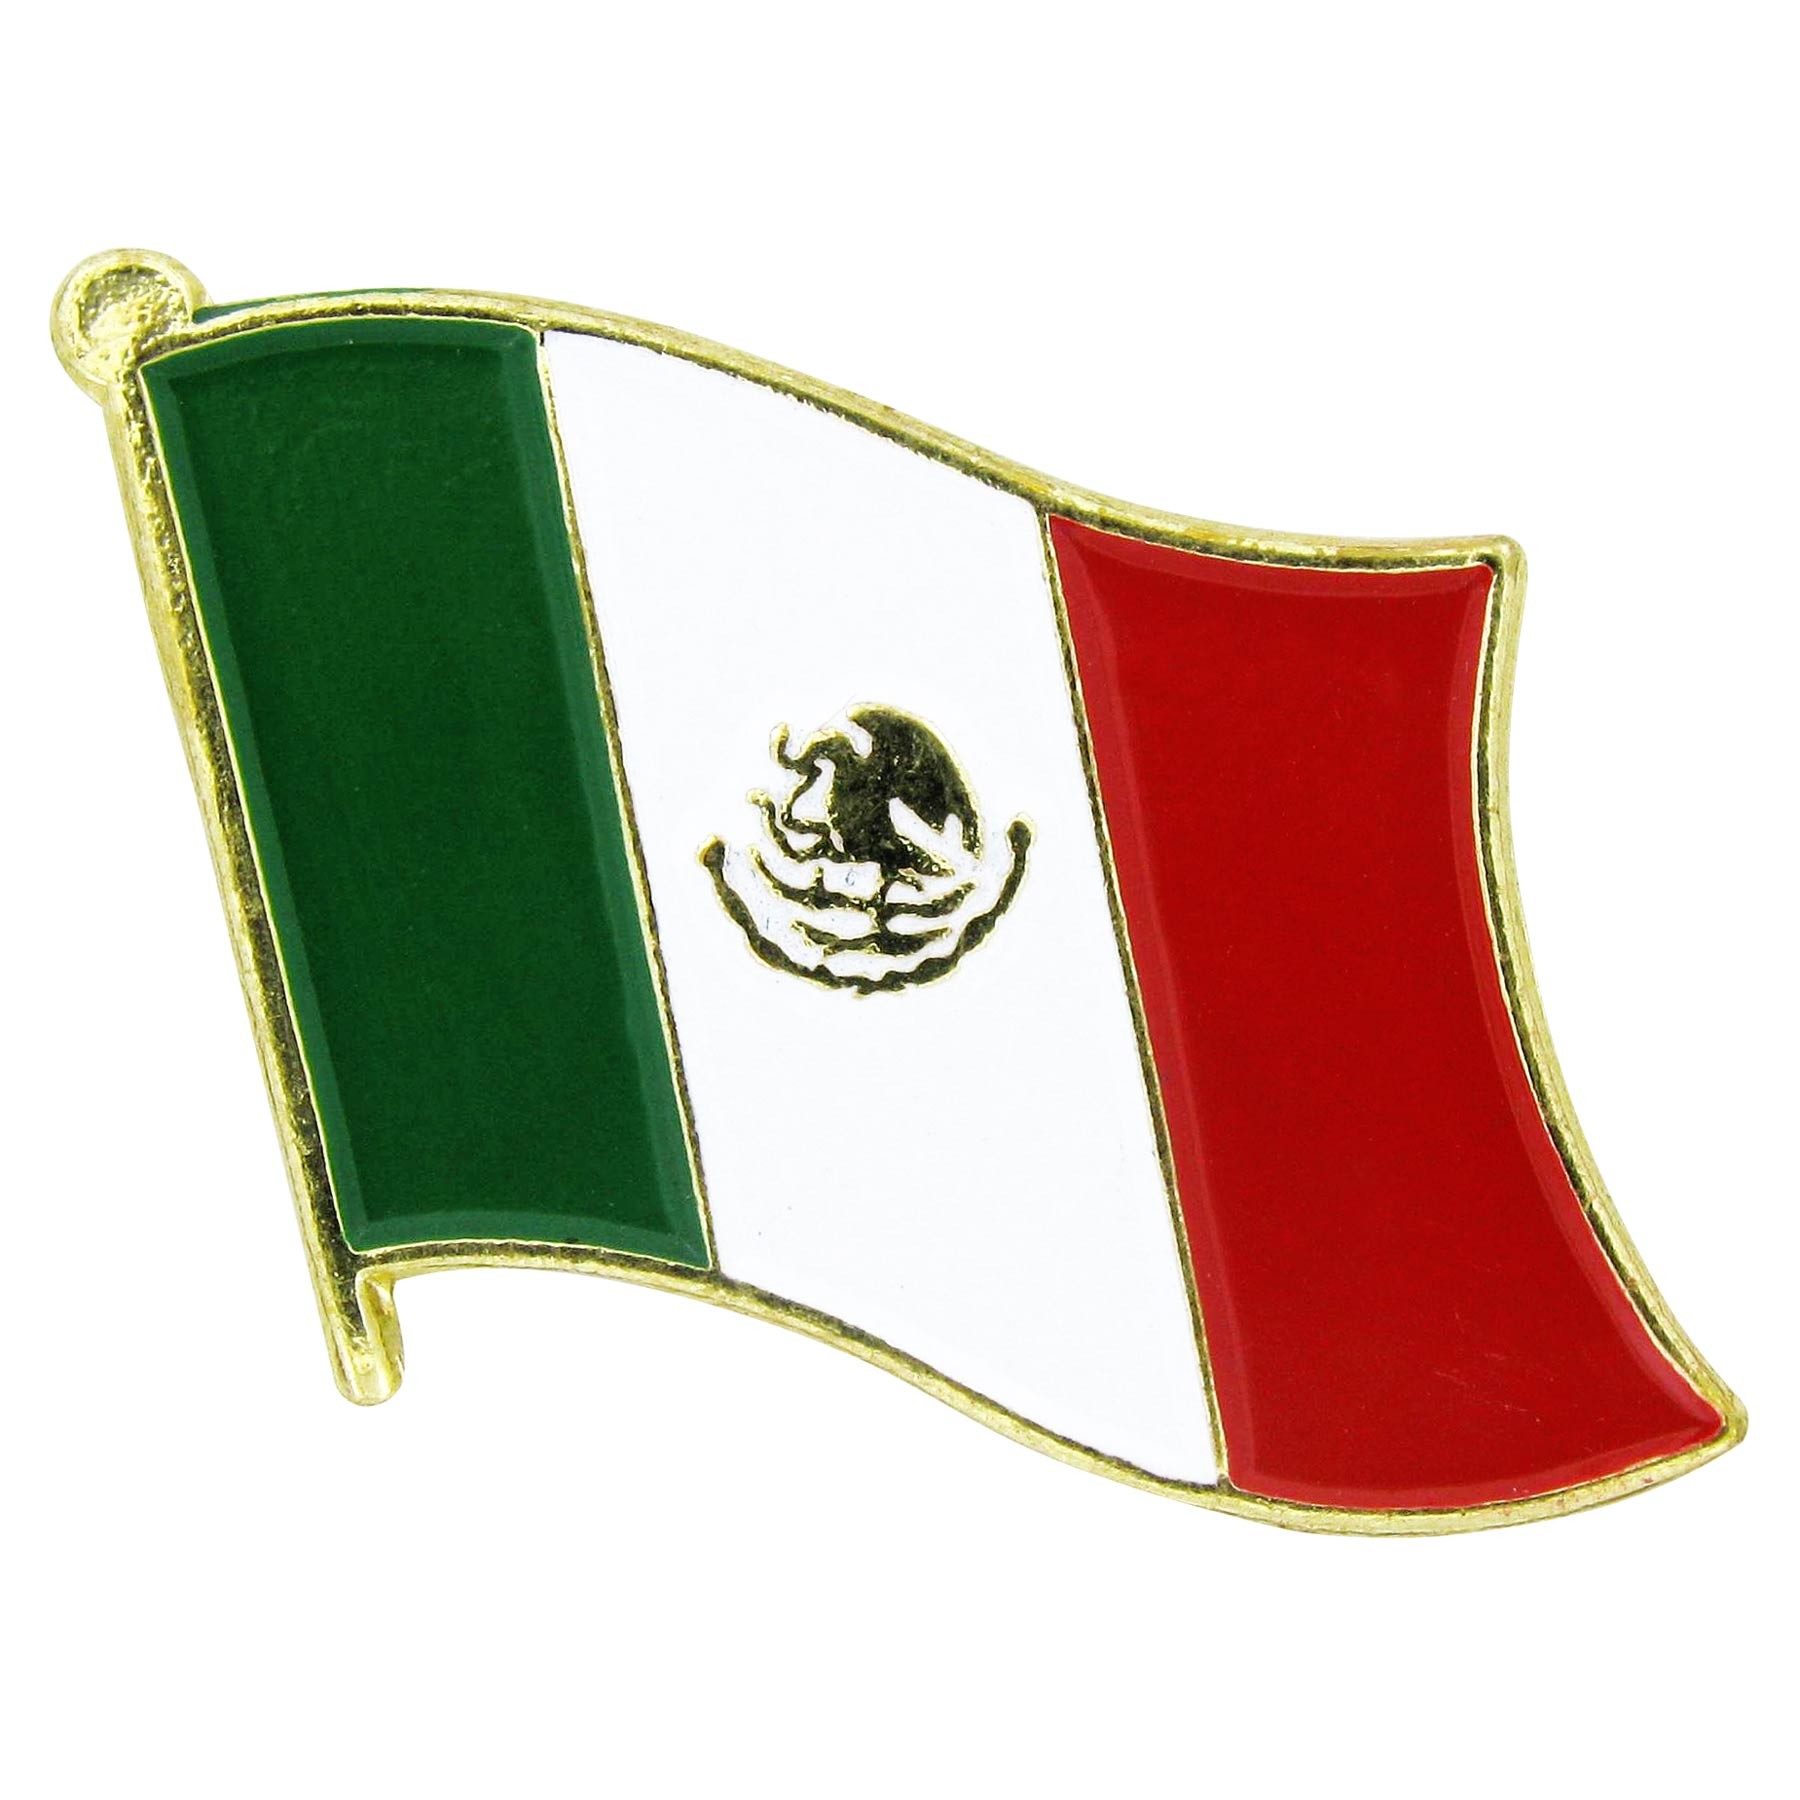 Mexican Flag Clip Art | Clipart Panda - Free Clipart Images